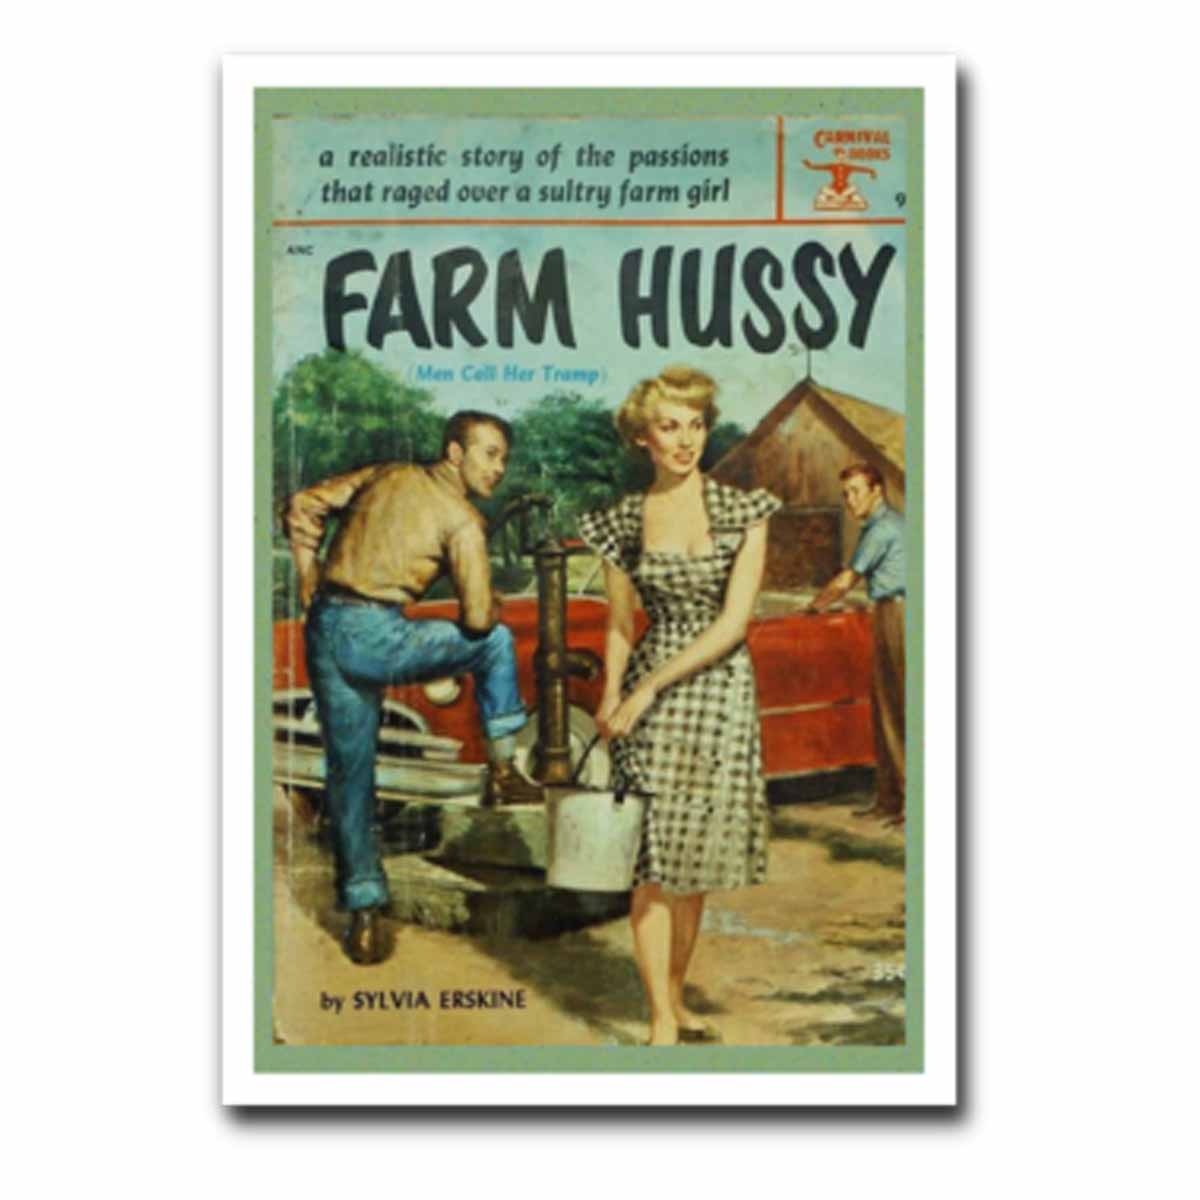 Farm Hussy Pulp Novel Cover Vinyl Sticker